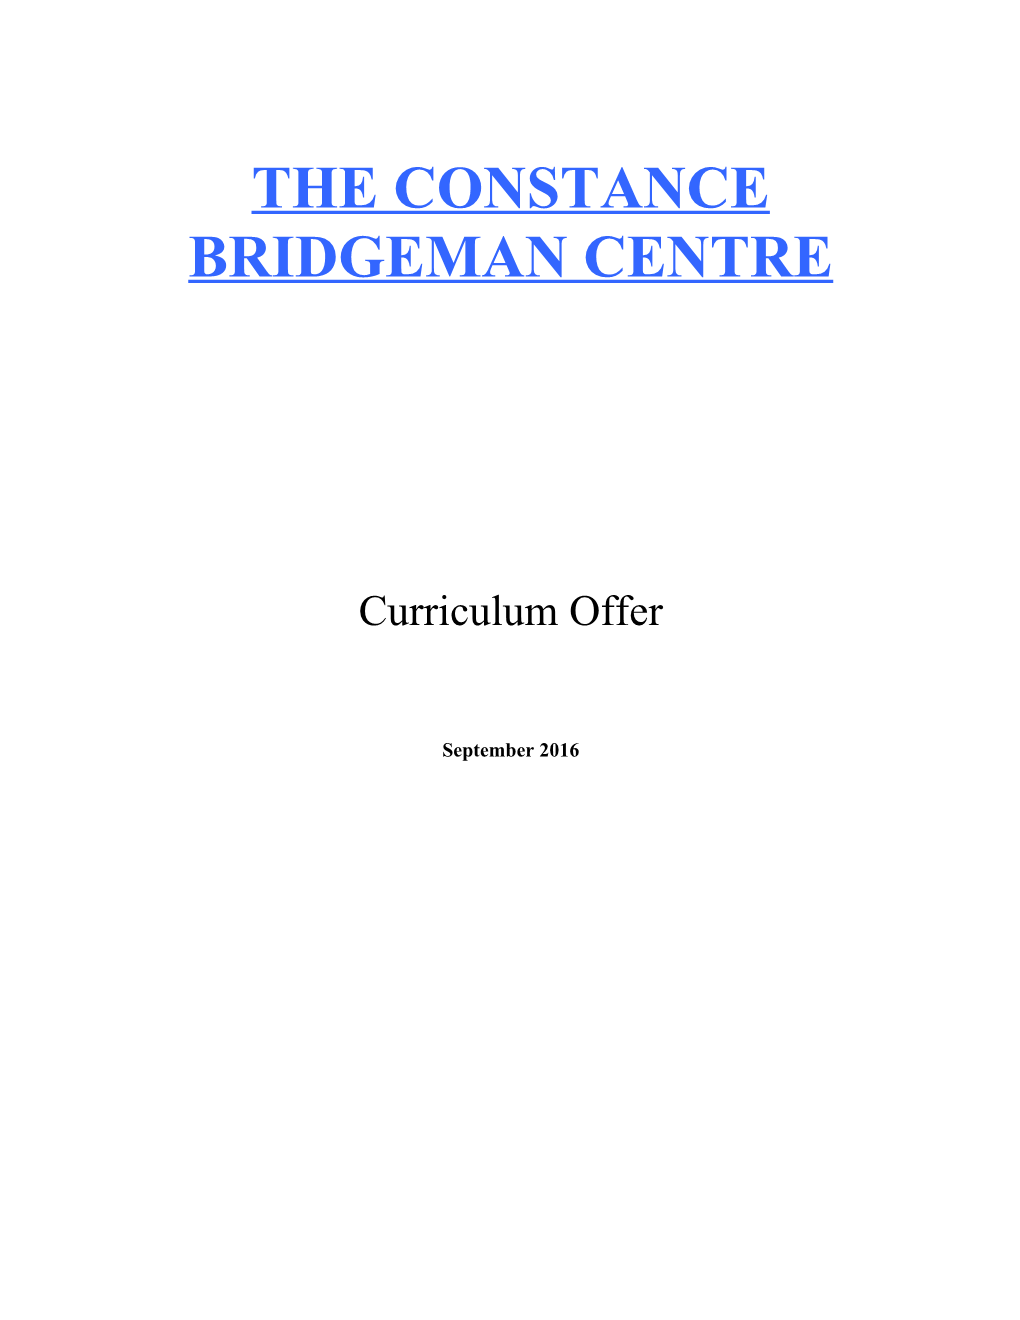 The Constance Bridgeman Centre